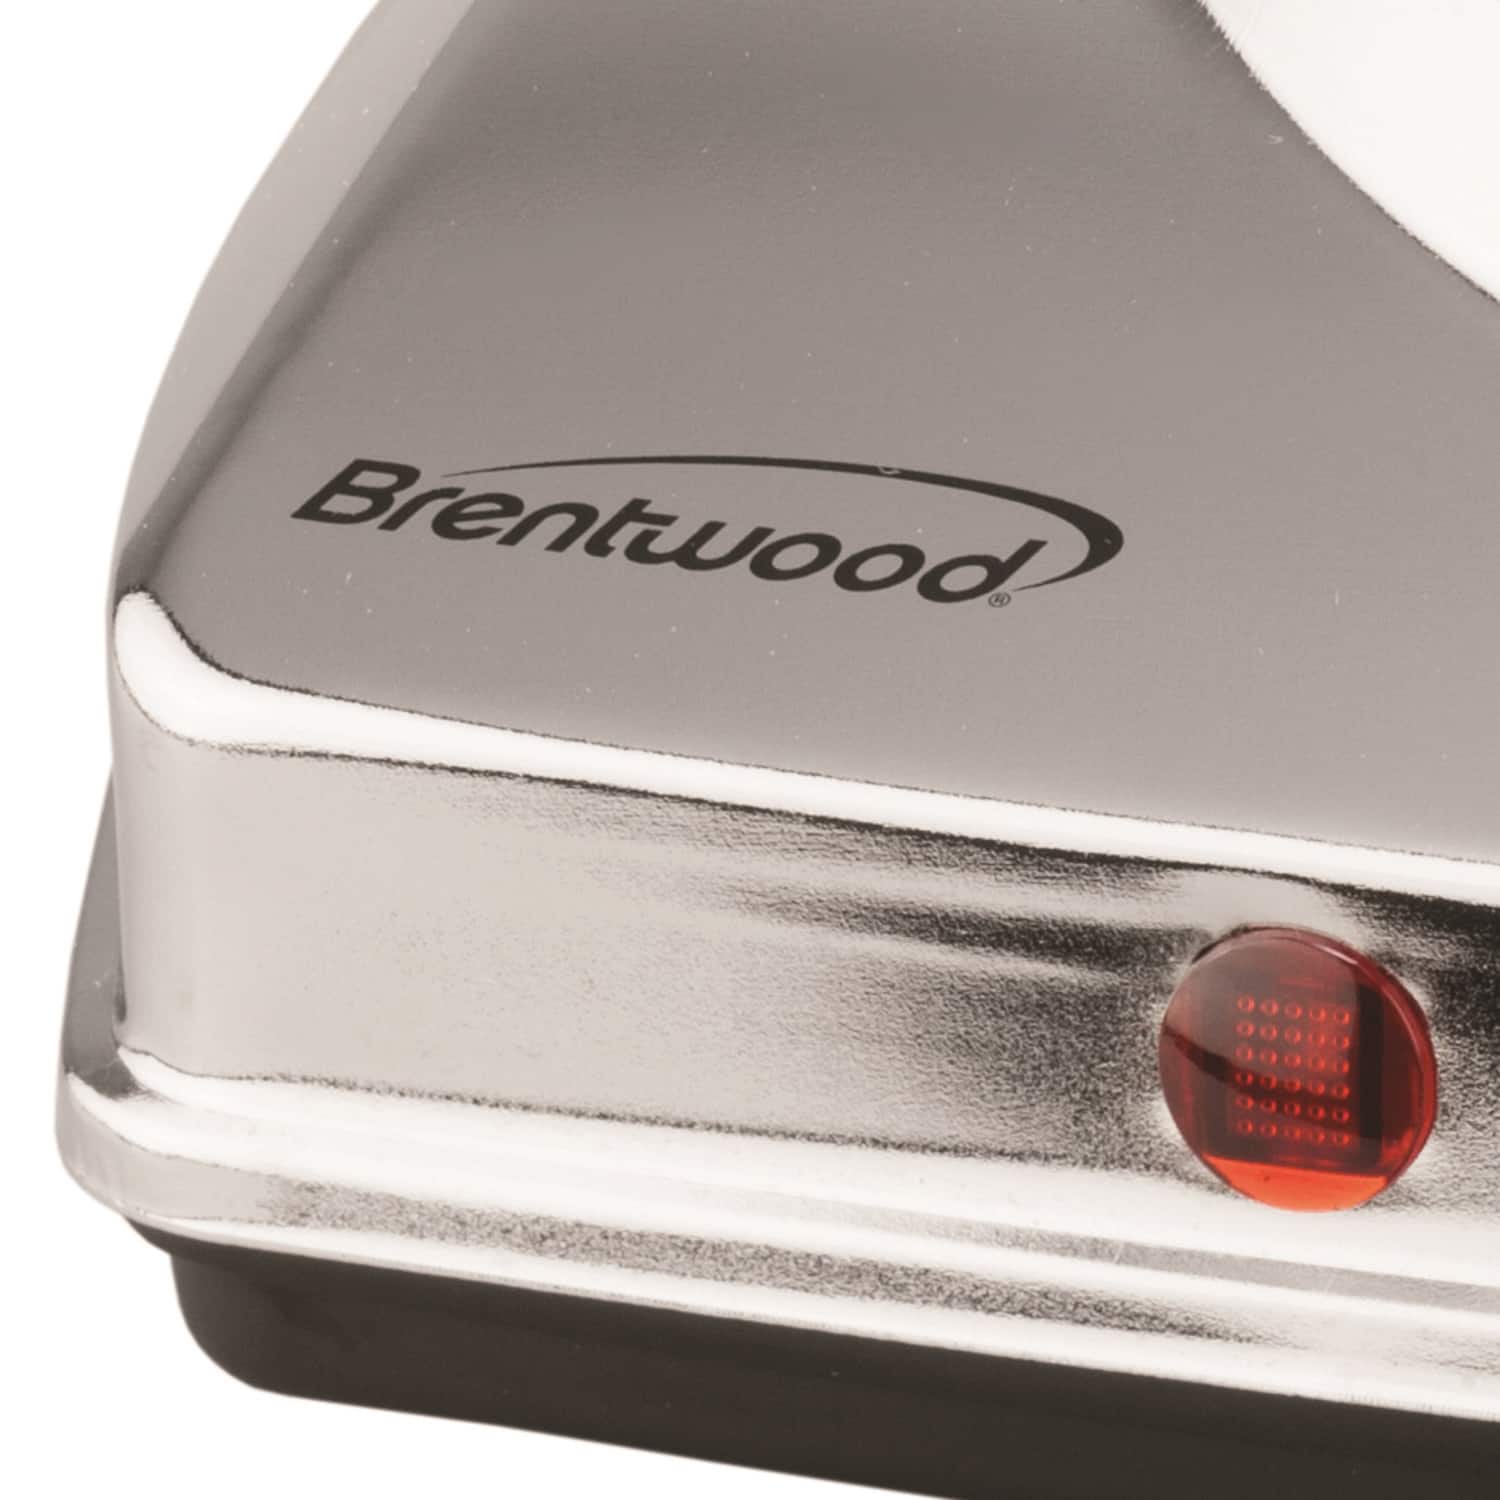 Brentwood 1000 Watt Electric Single-Burner Hot Plate